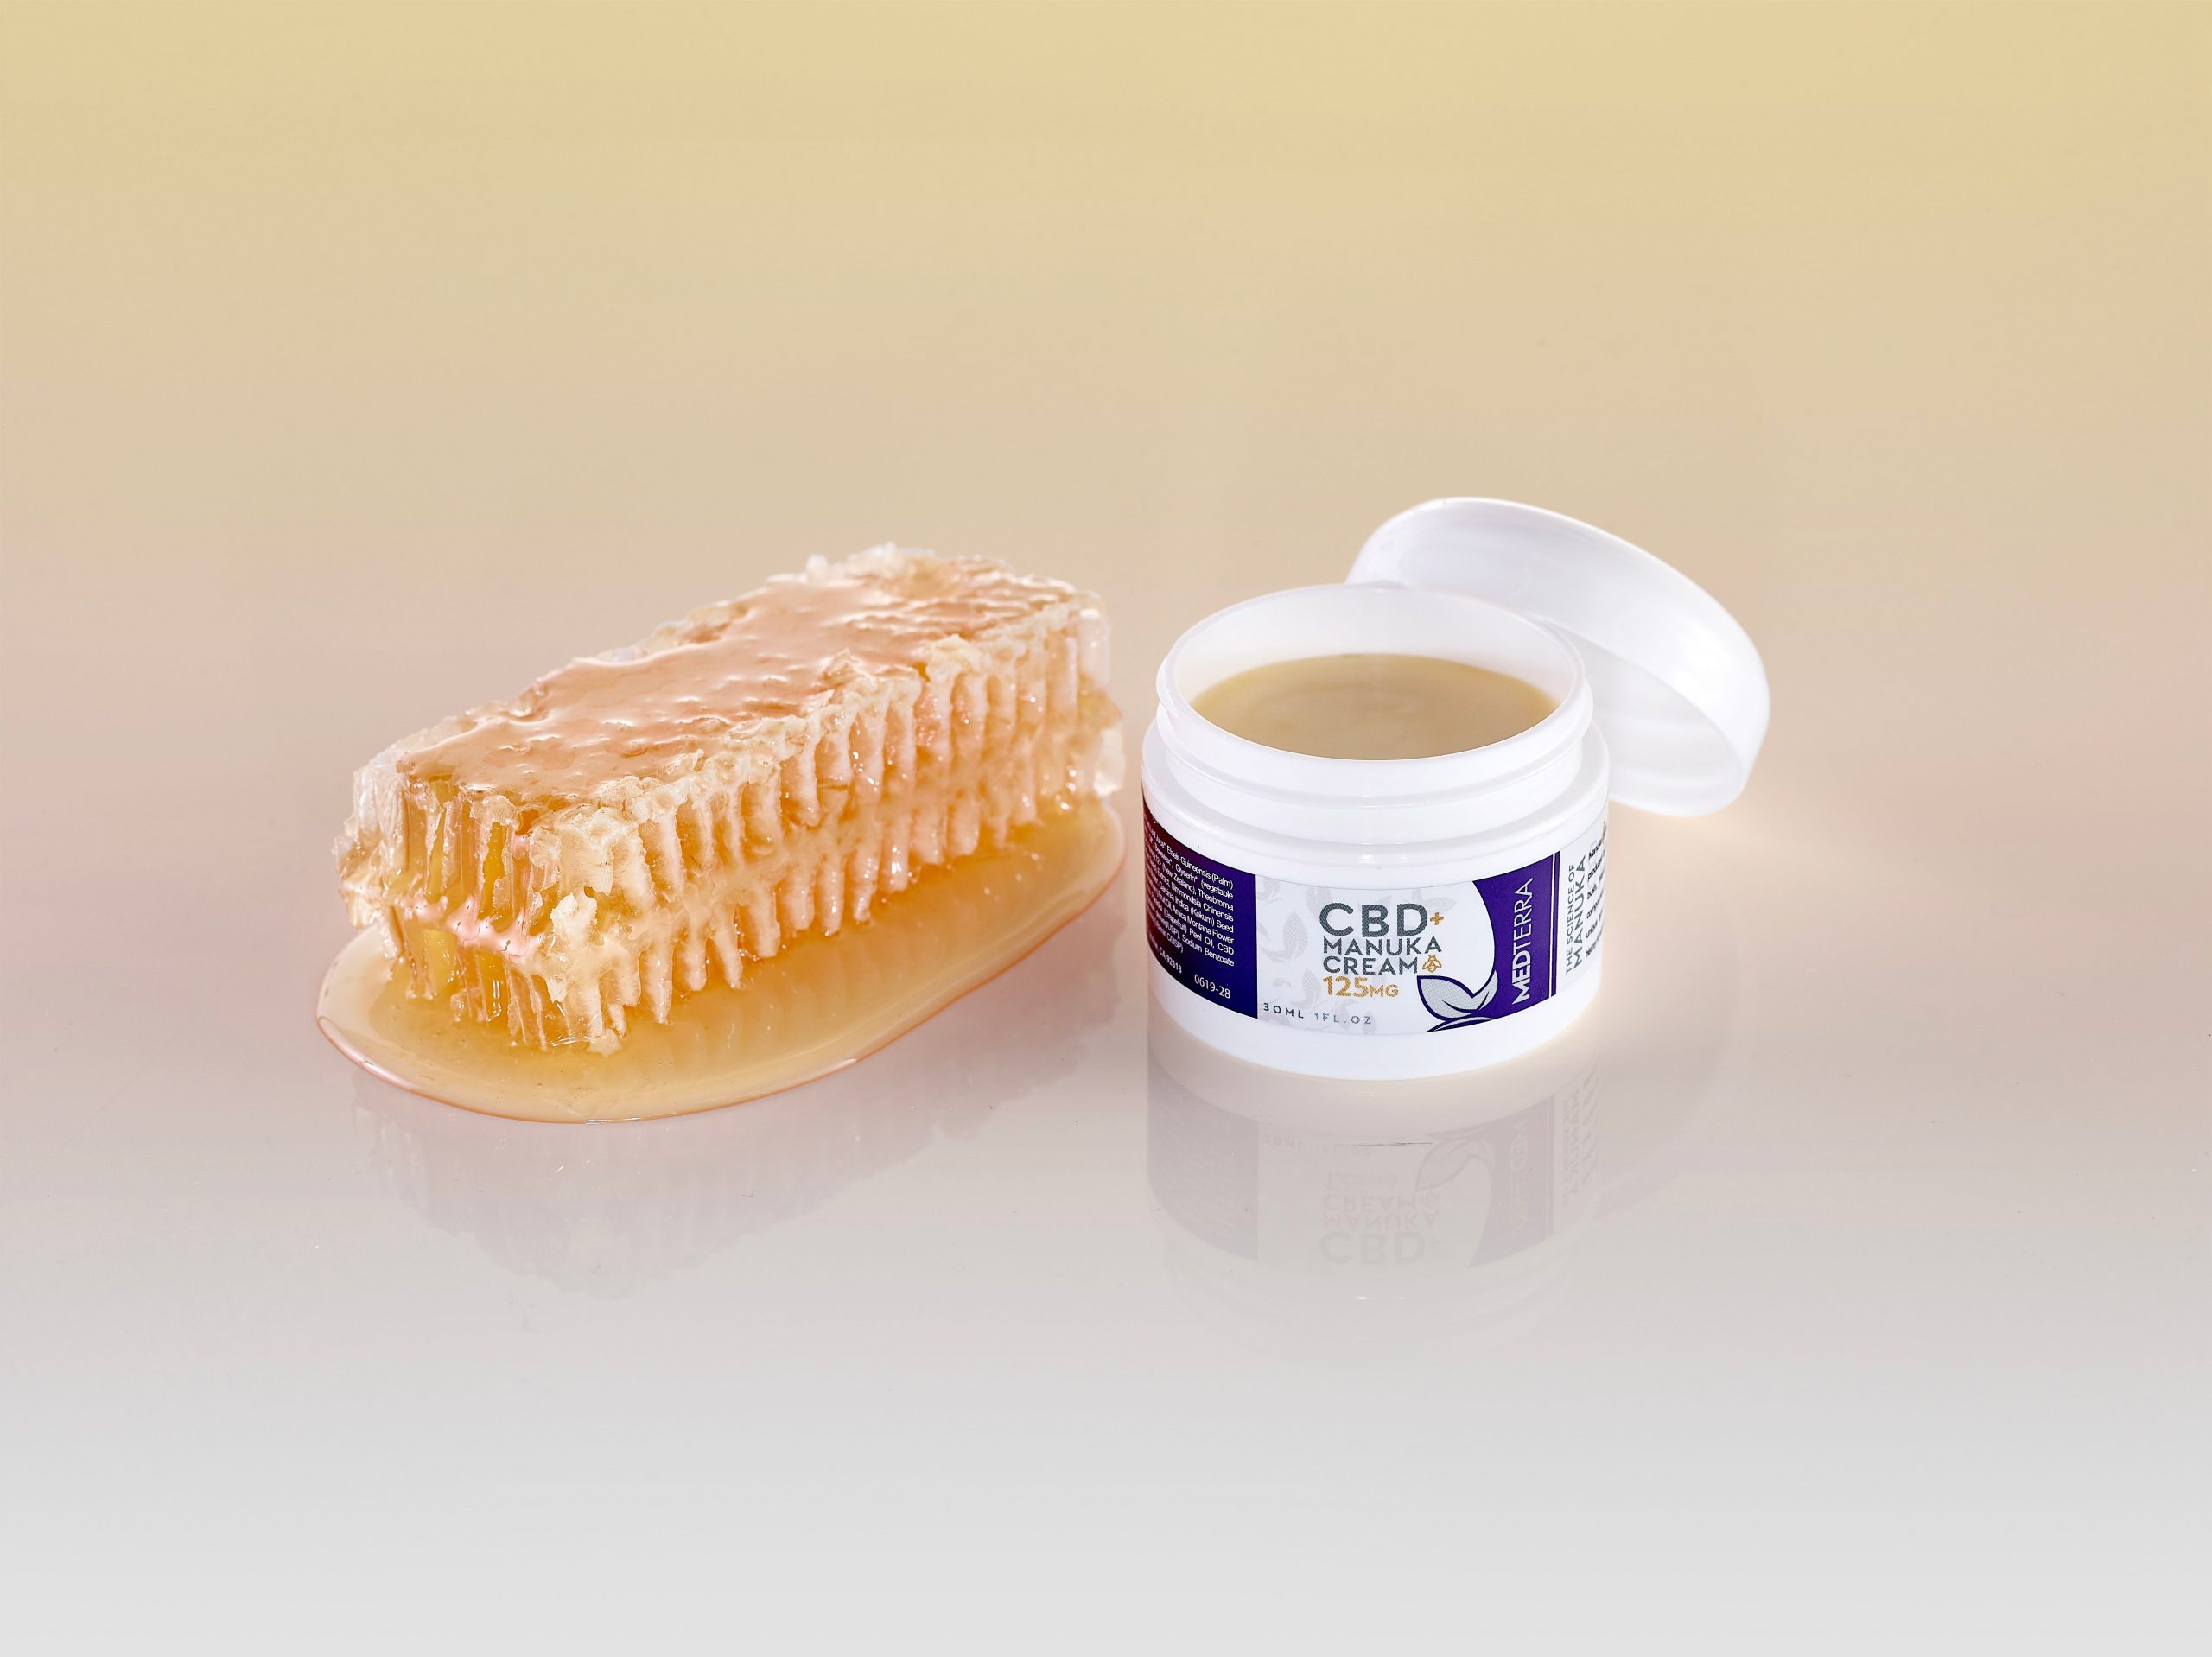 Medible review CBD Manuka Honey cream scaled